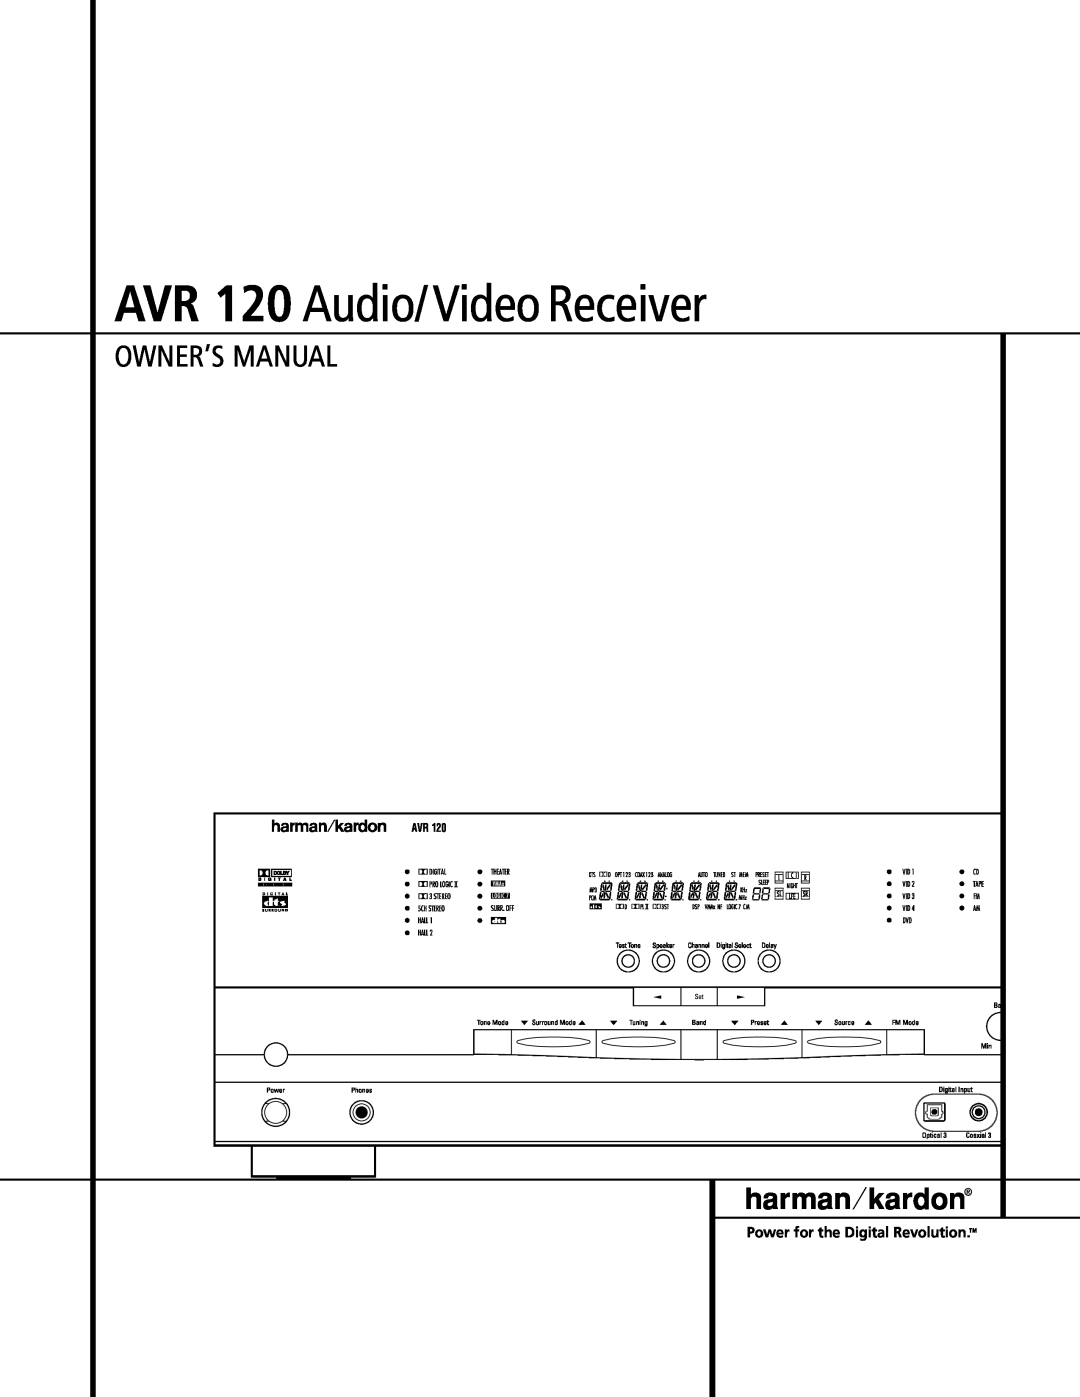 Harman-Kardon owner manual AVR 120 Audio/ Video Receiver 